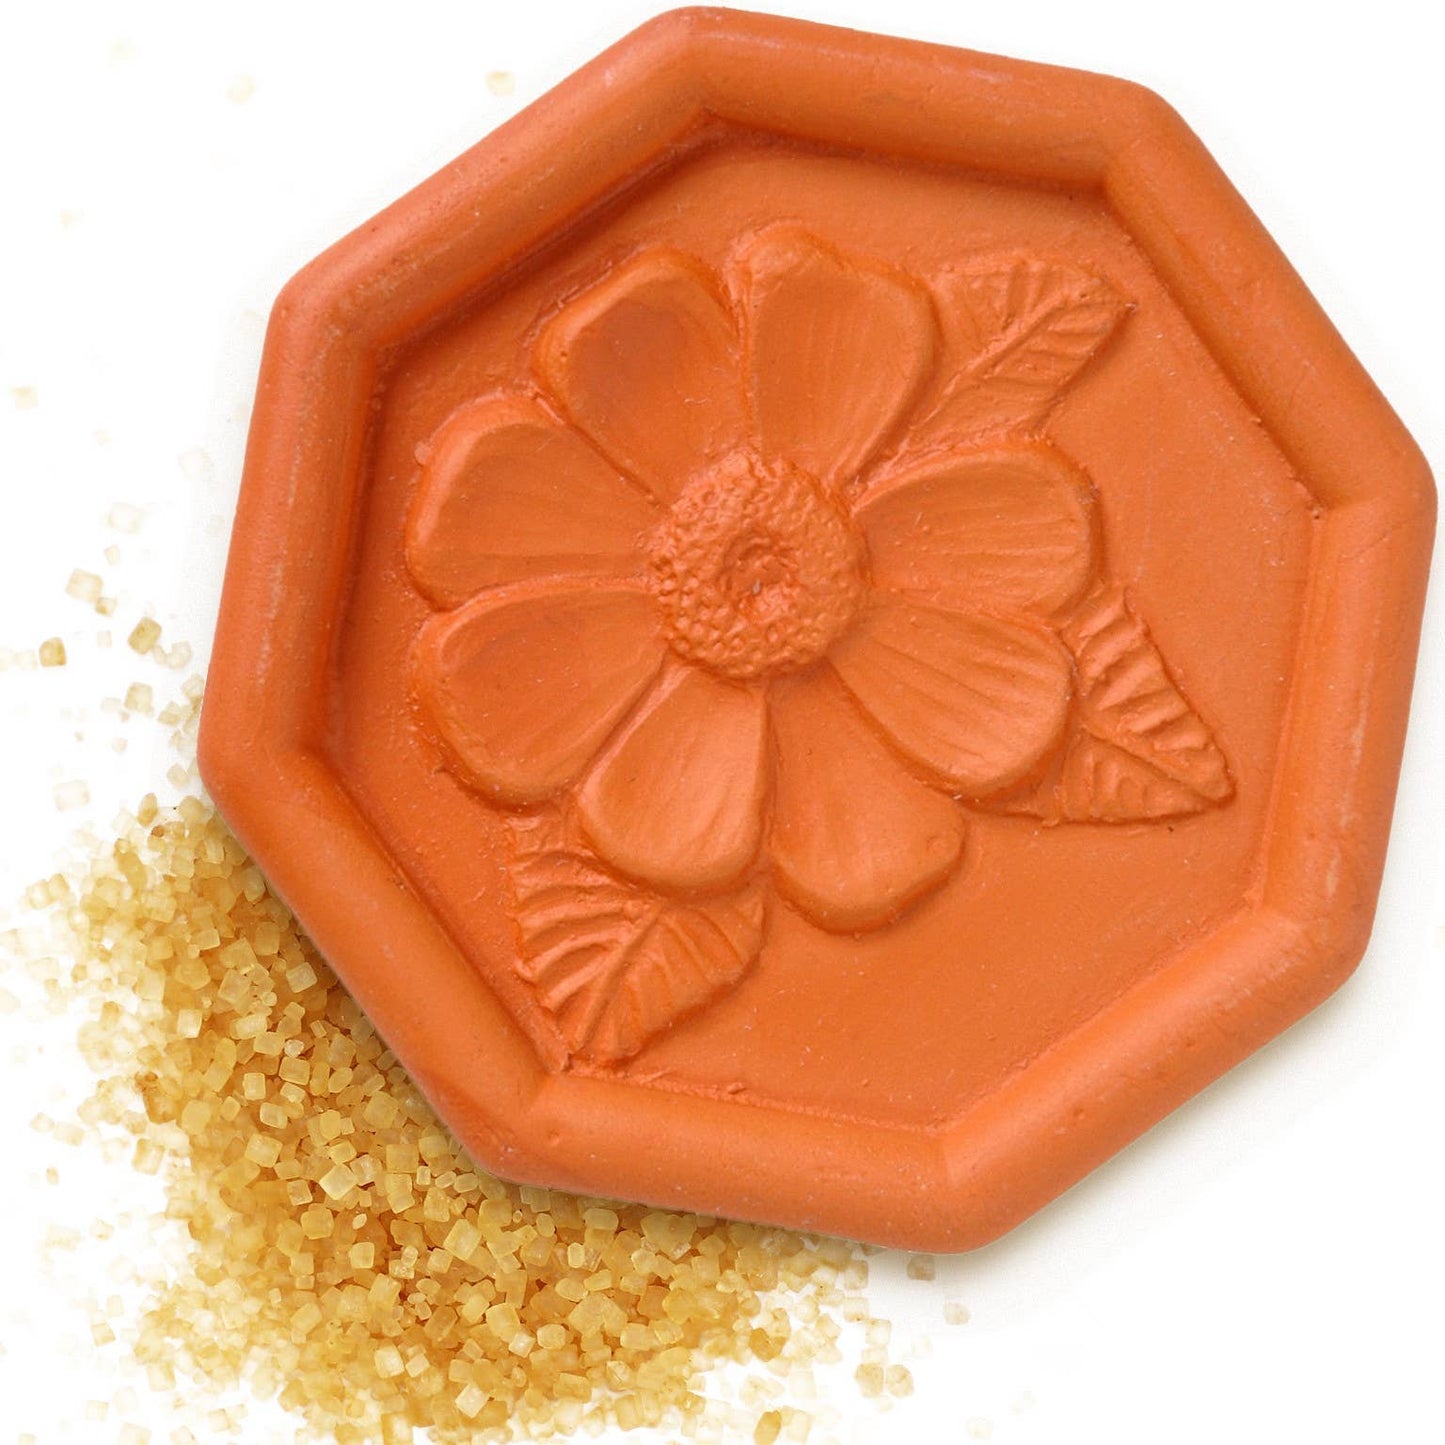 Brown Sugar Saver - Daisy Design